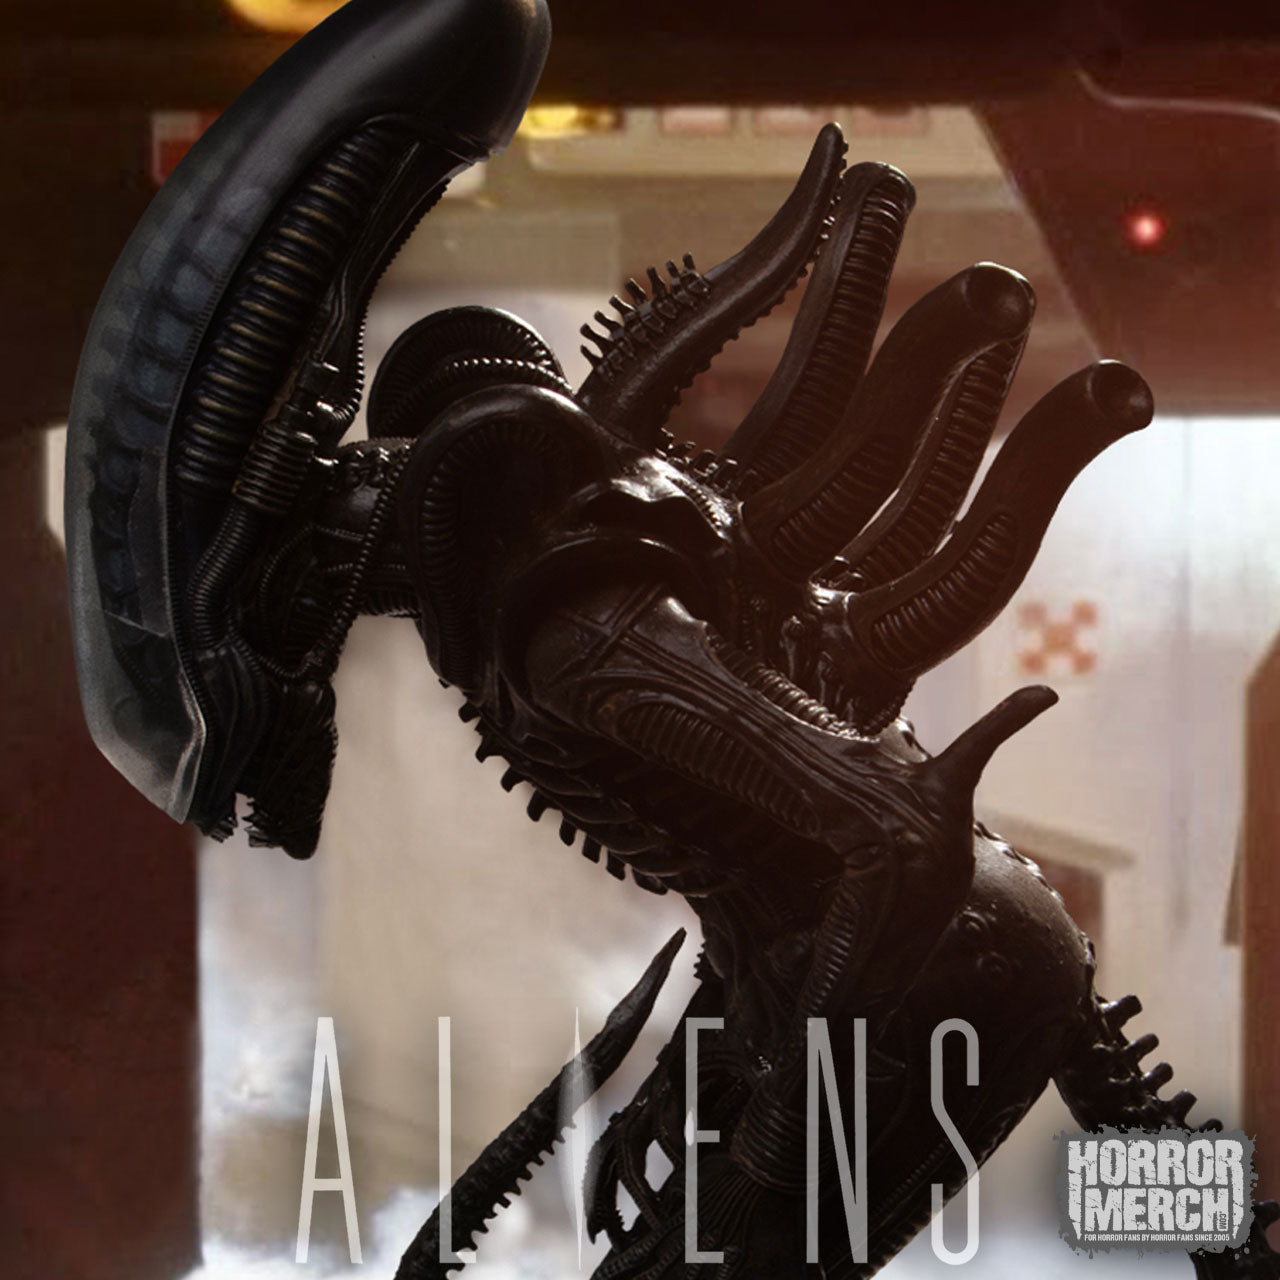 Aliens - Deluxe 1:12 scale figure [Figure]